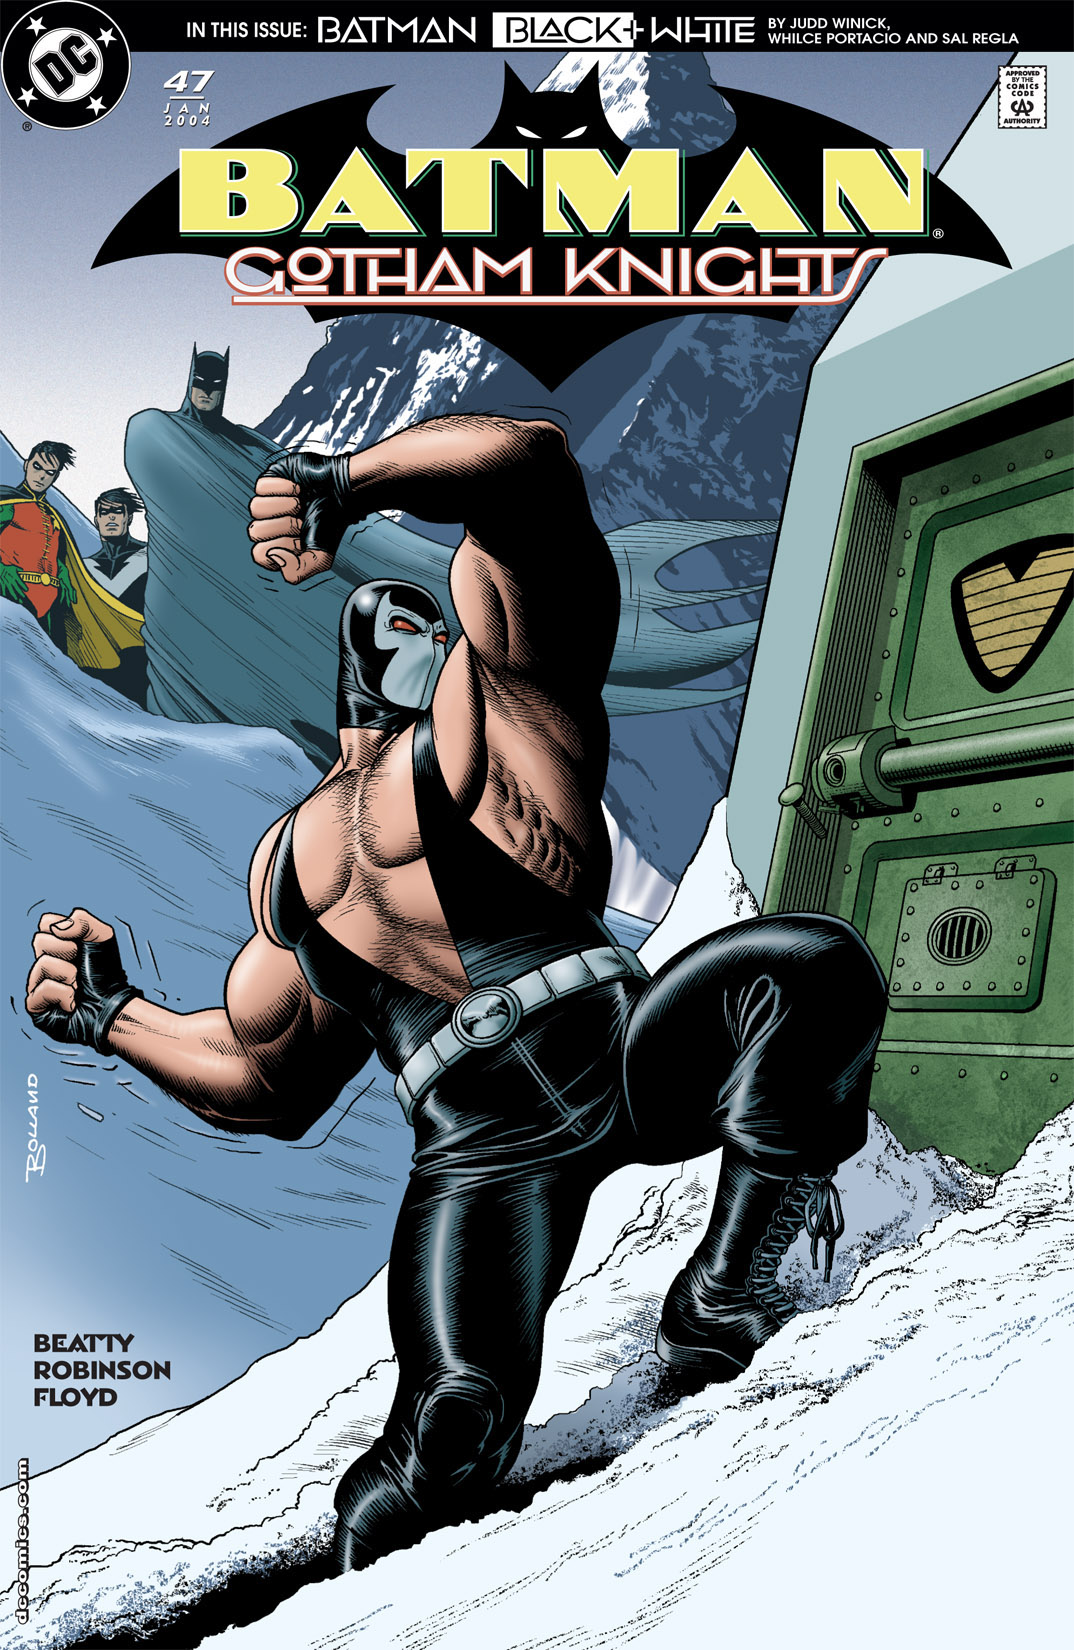 Batman: Gotham Knights #47 preview images